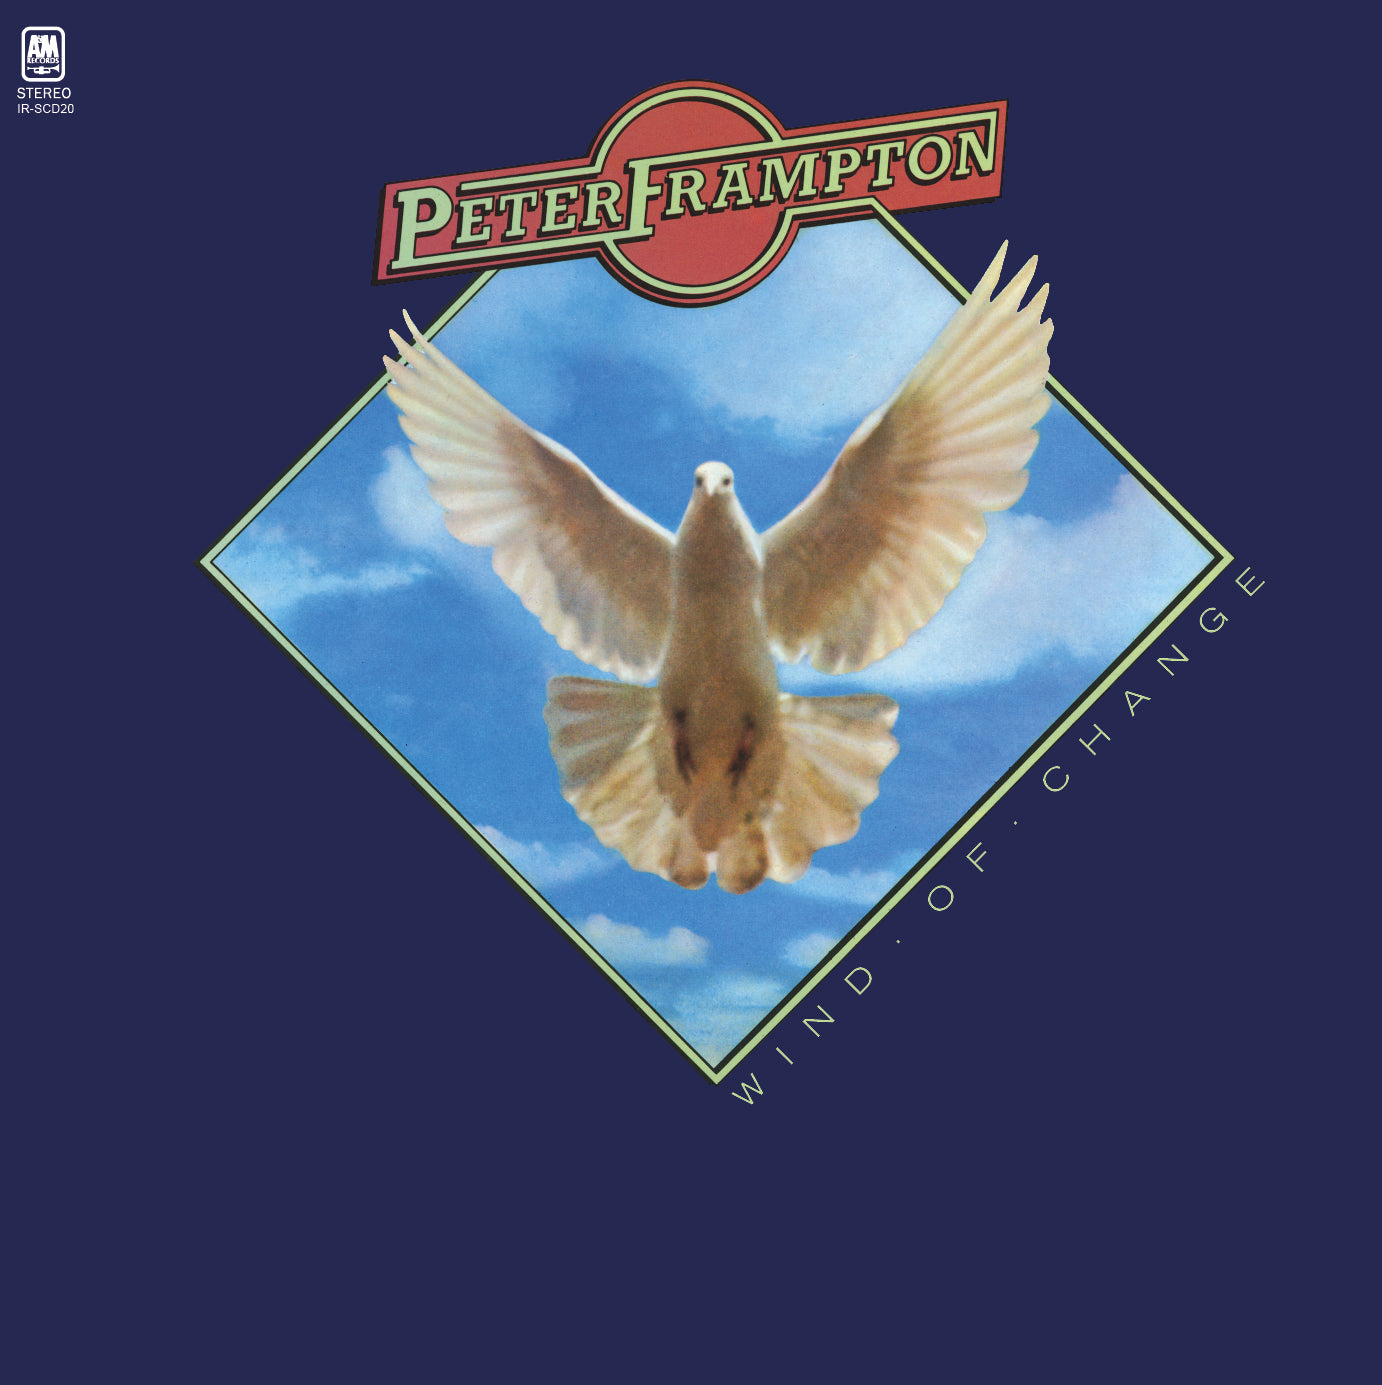 Peter Frampton "Wind of Change" CD/SACD (SHIPPING NOW!)